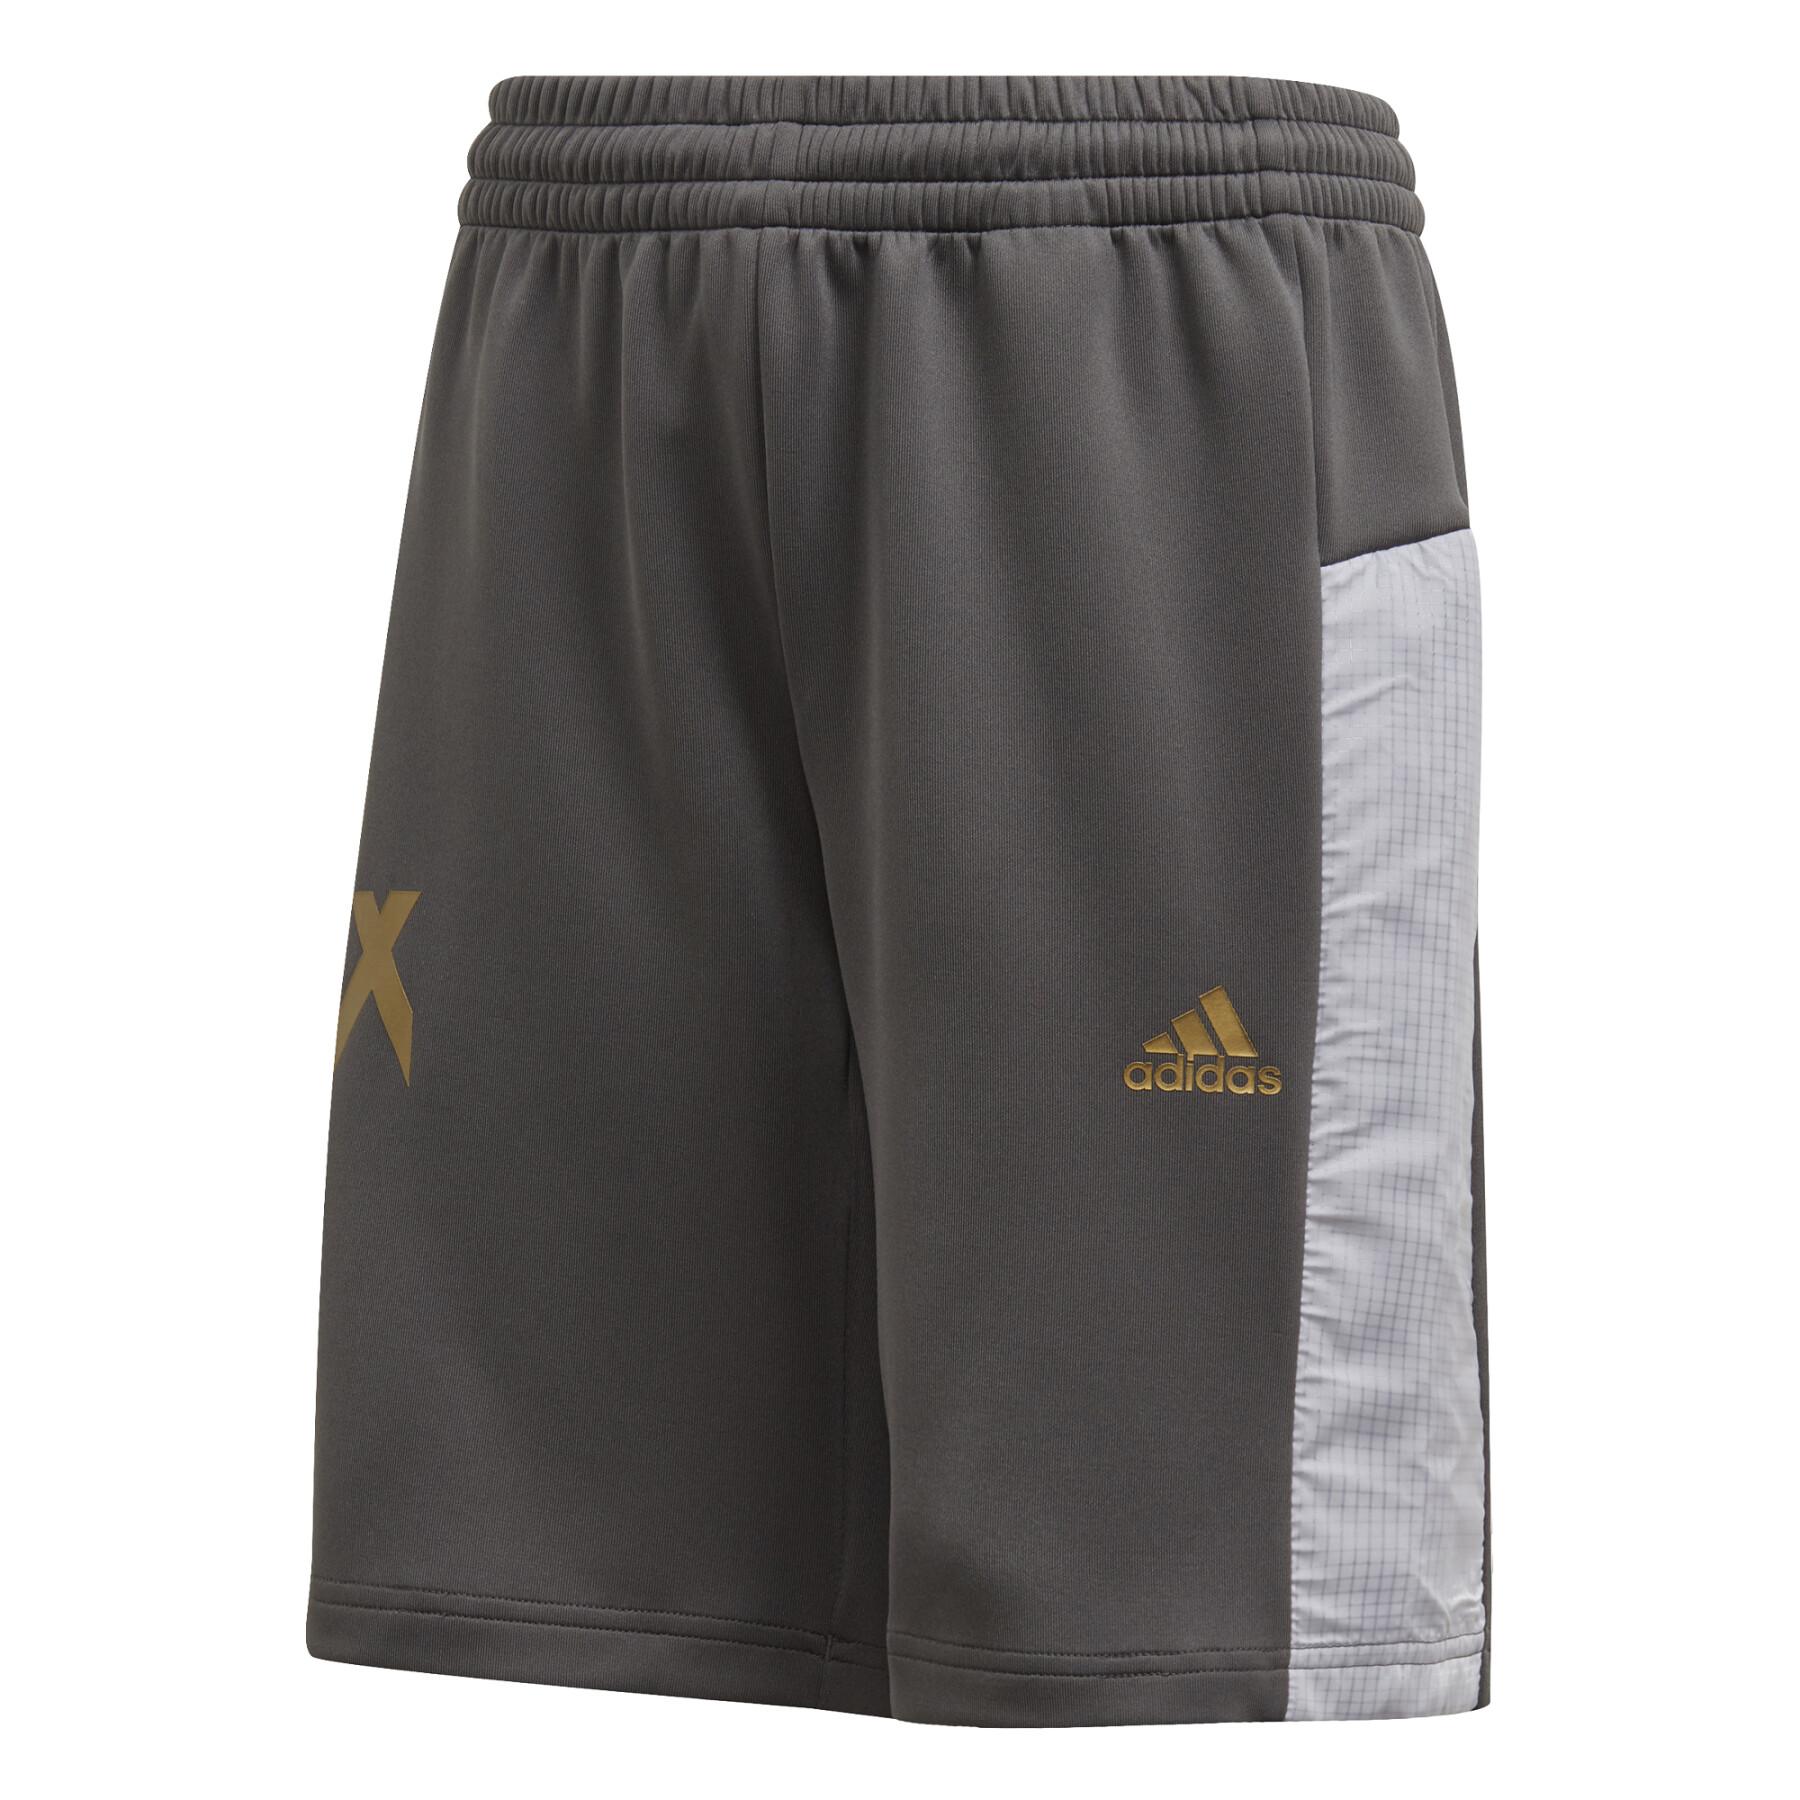 Children's shorts adidas Football-Inspired X Aeroeady